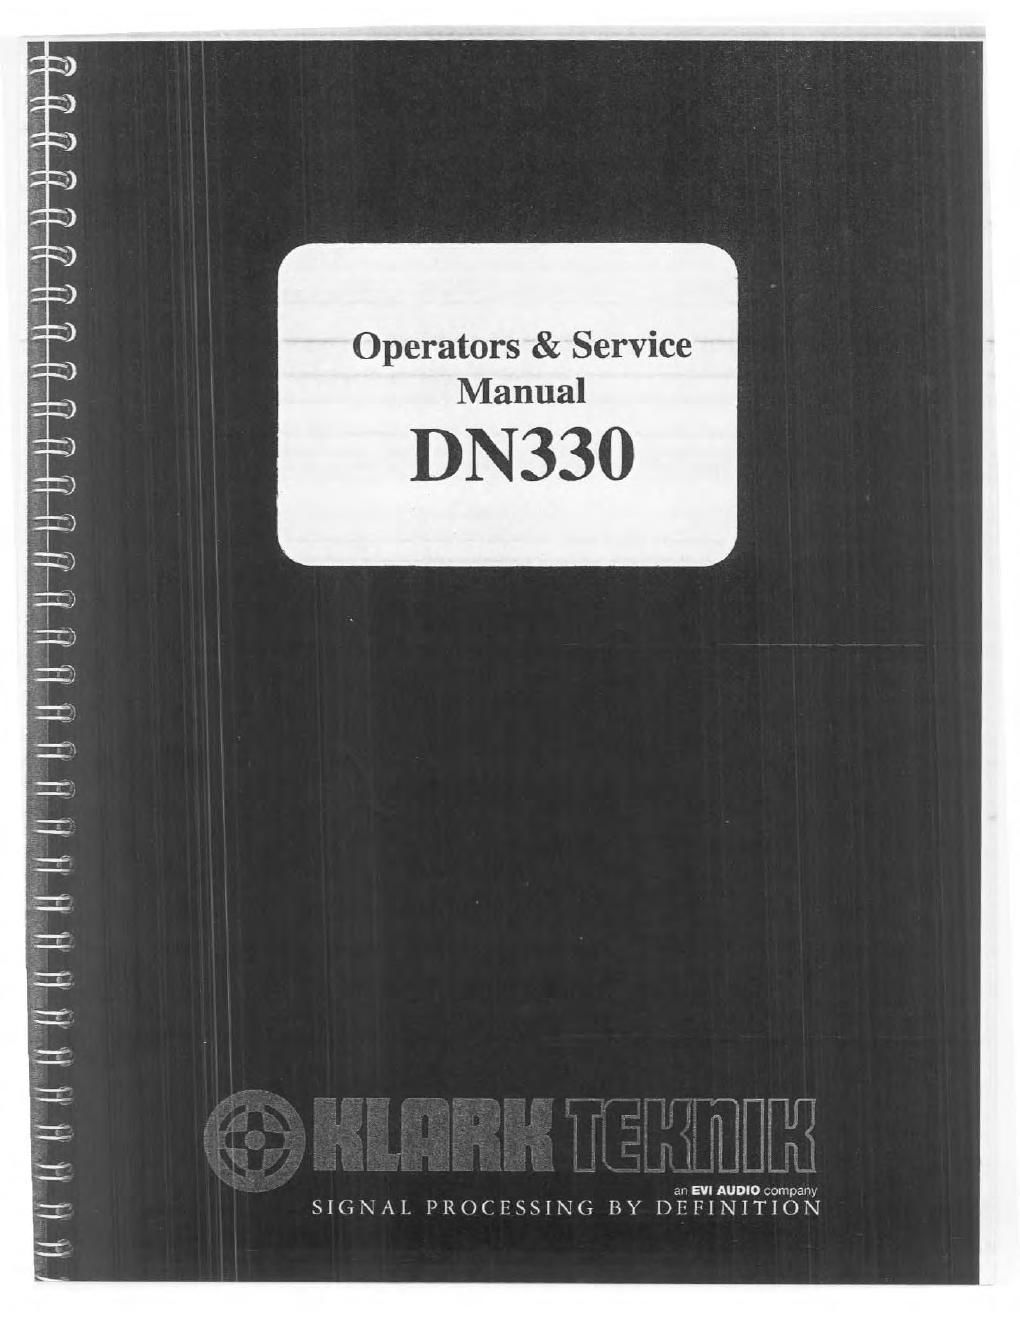 klark teknik dn330 operators and service manual